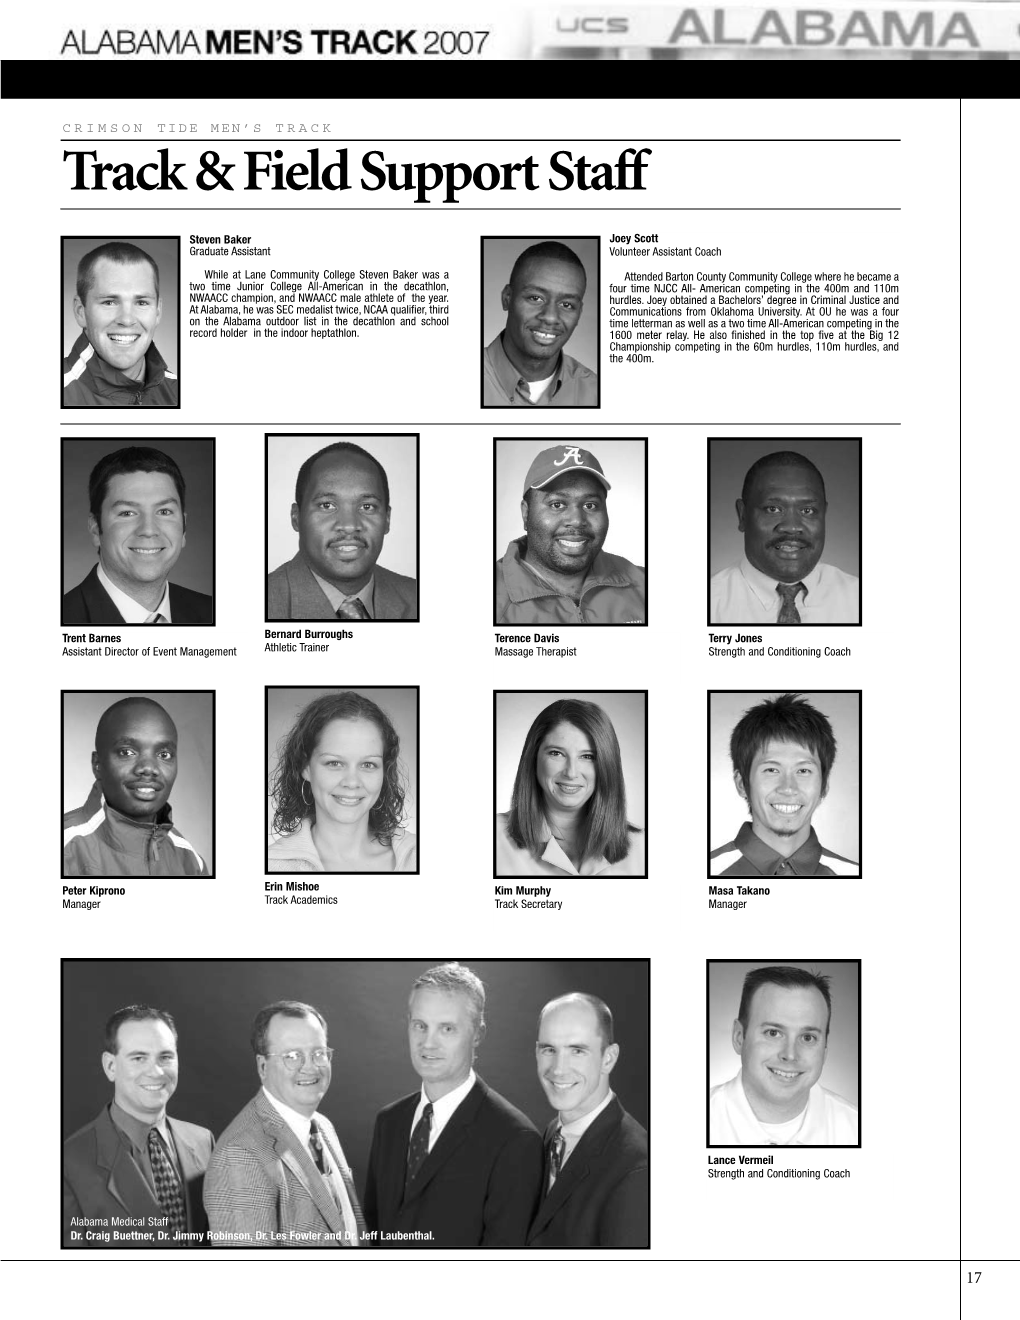 Track & Field Support Staff